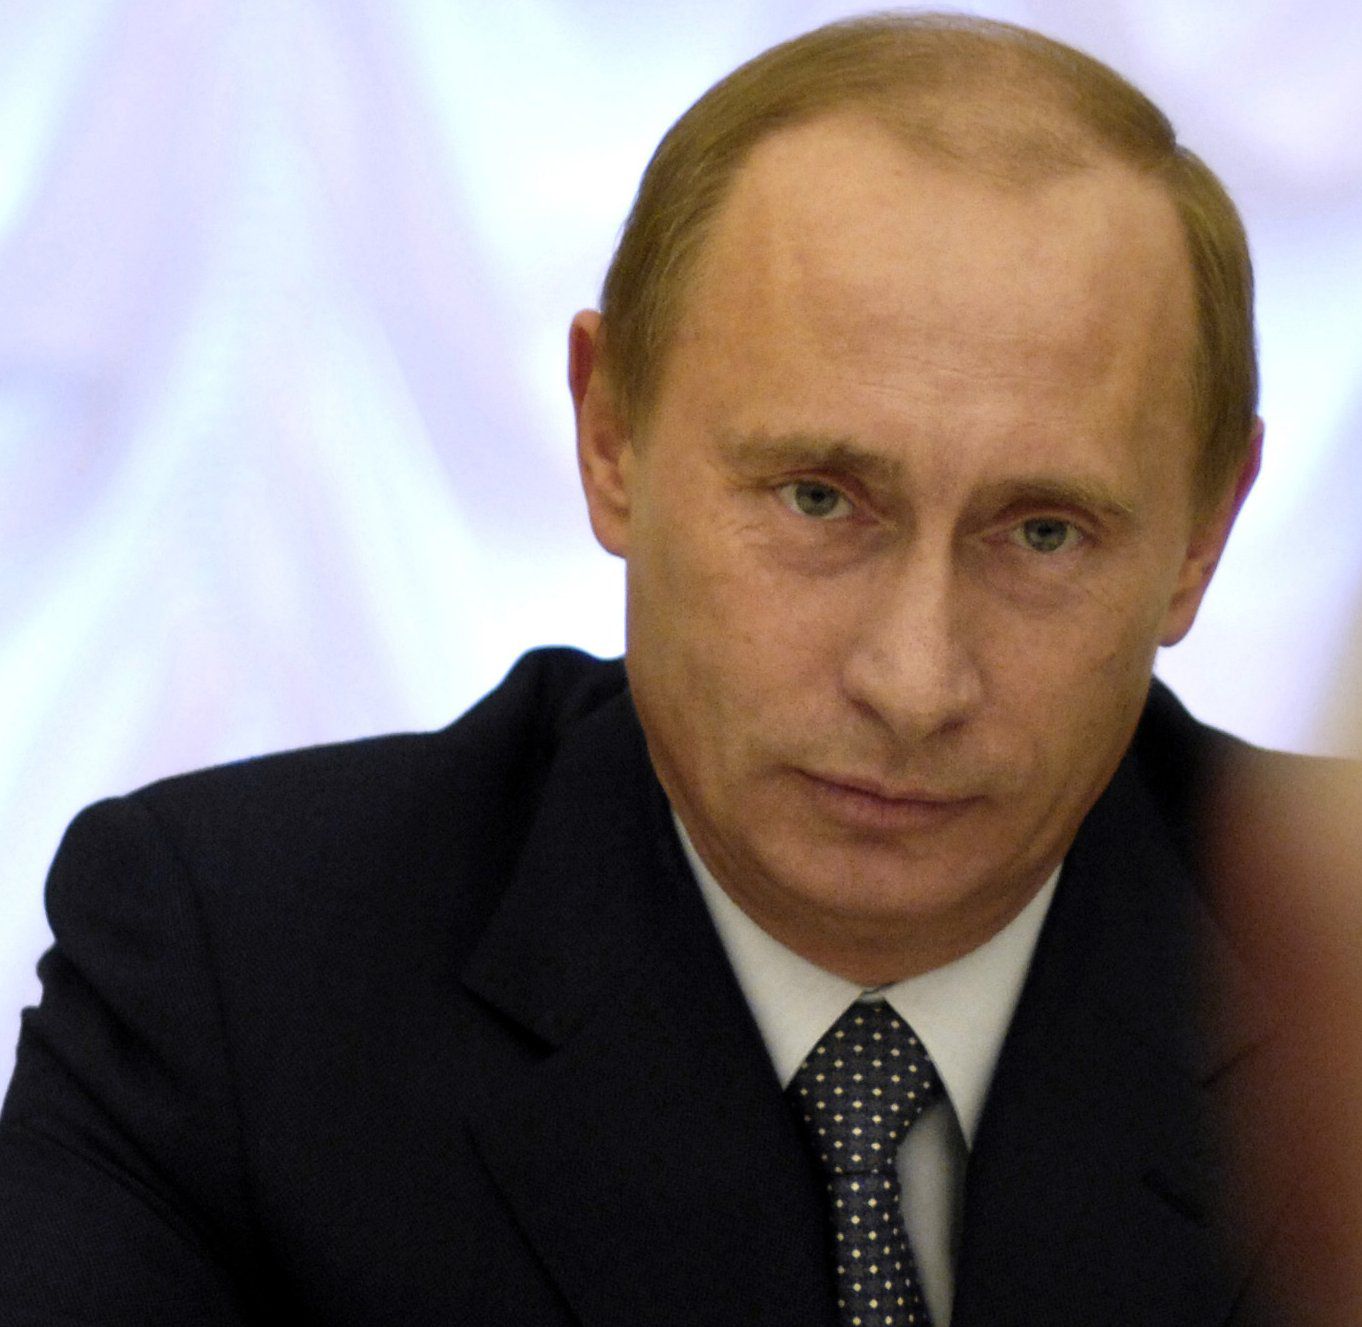 Russian President (soon to be Prime Minister) Vladimir Putin